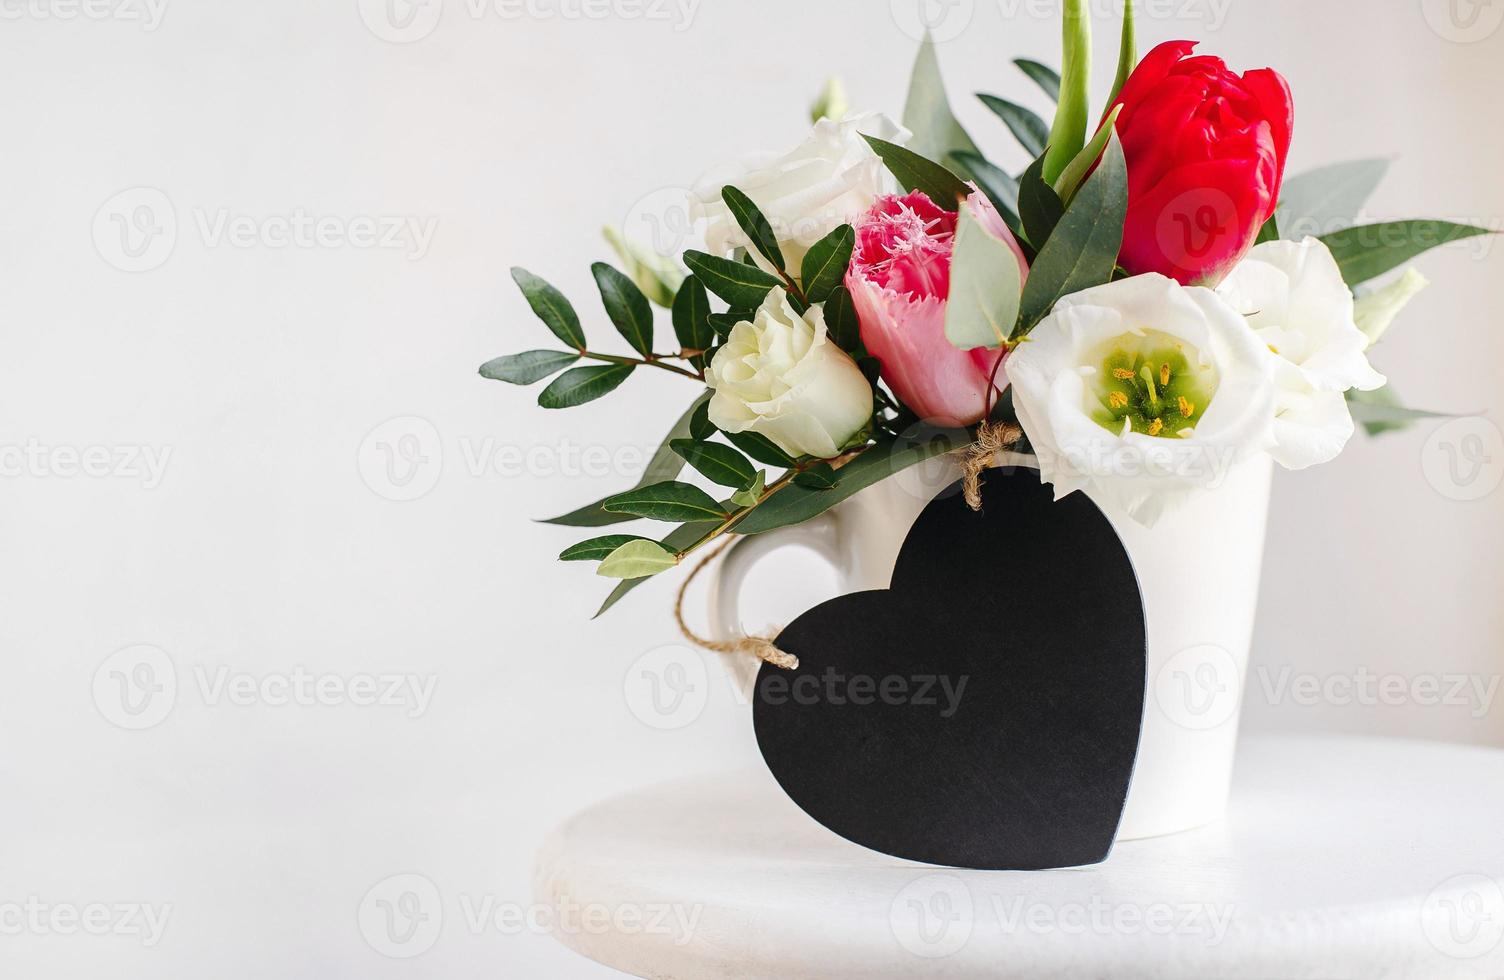 zwarte bord hart copyspace. lenteboeket in witte vaas op houten witte standaard. rozen, tulpen en lisianthus. foto